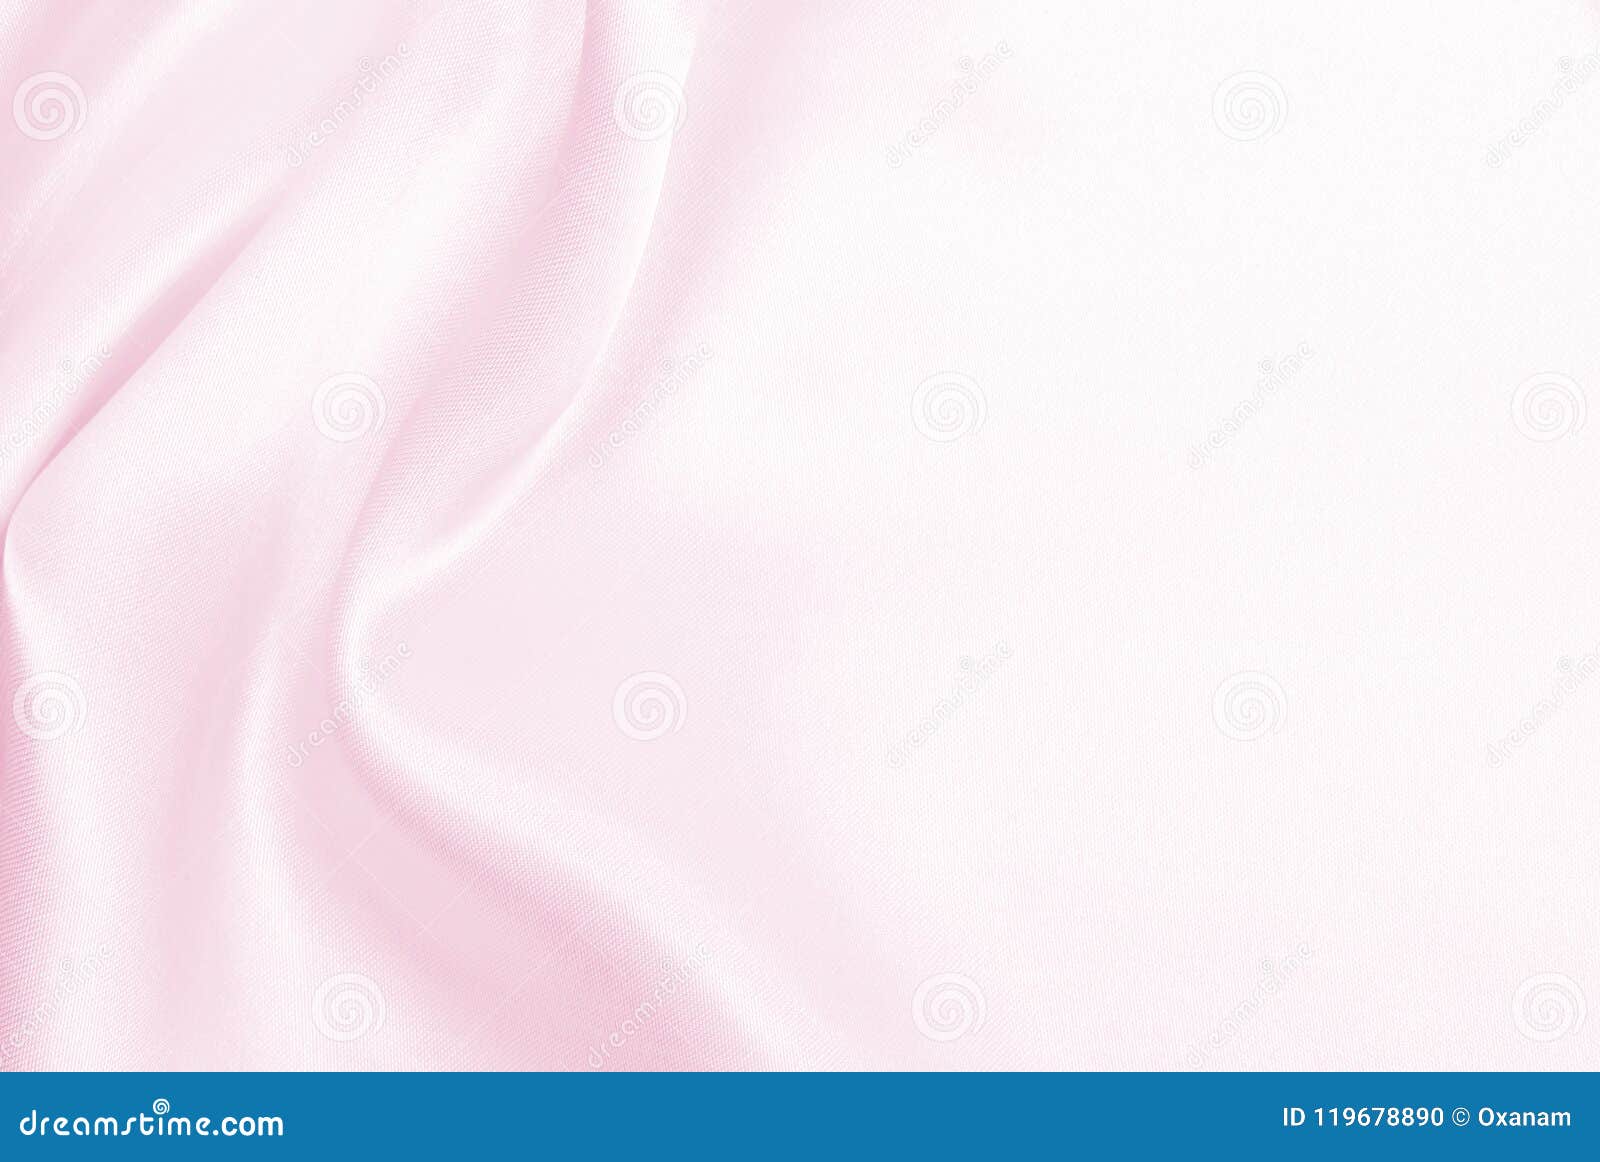 Smooth Elegant Pink Silk or Satin Texture As Wedding Background. Stock ...